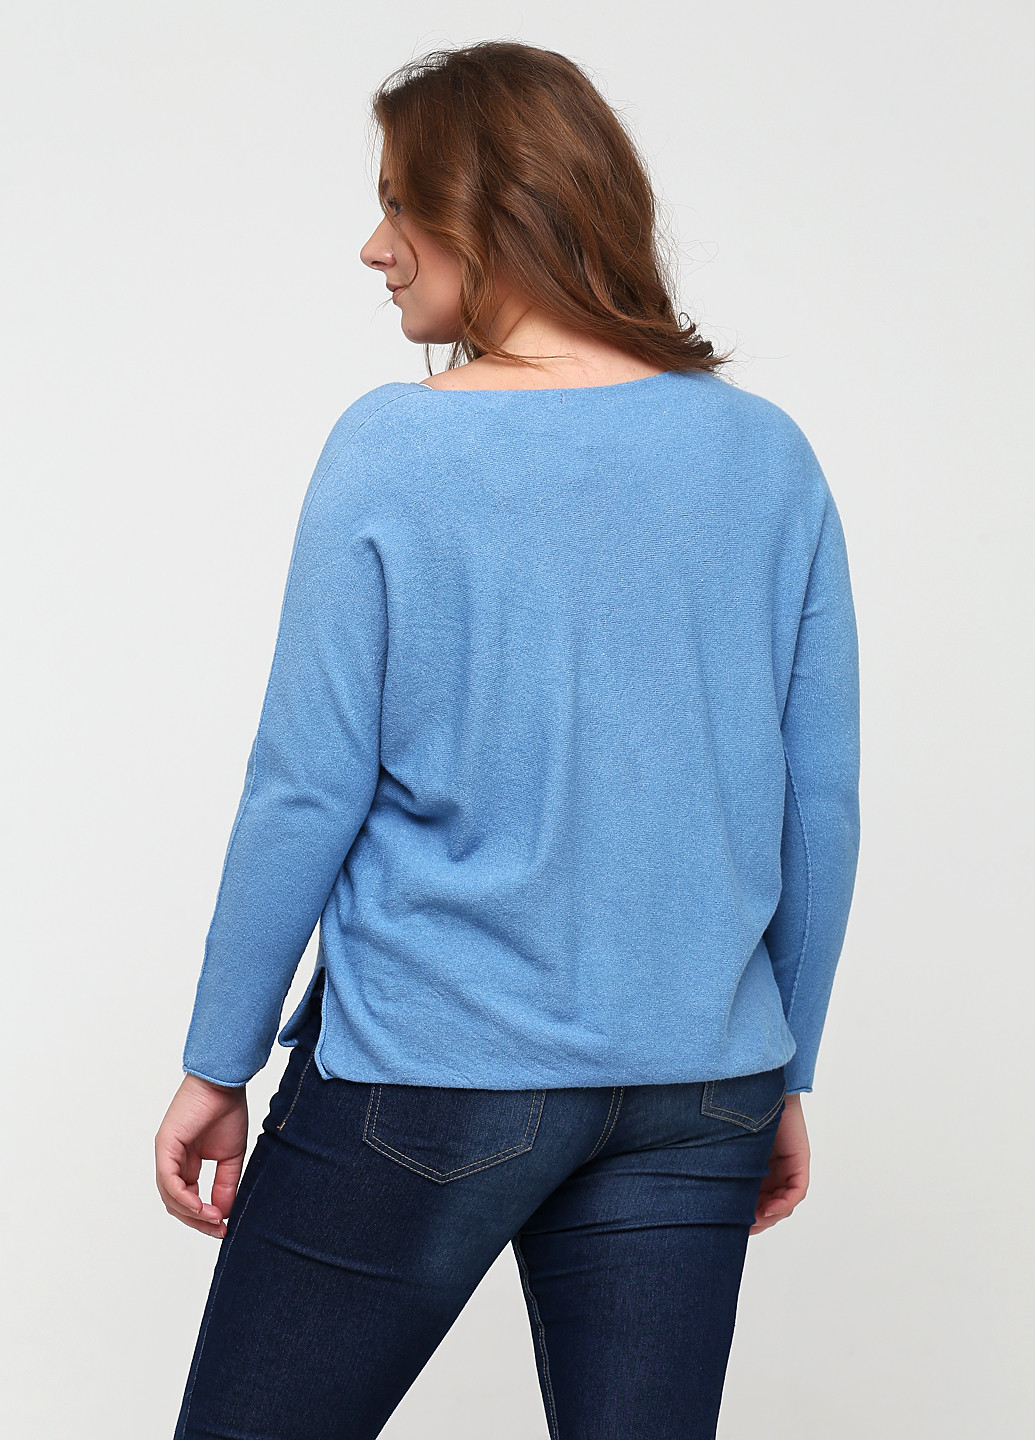 Голубой демисезонный пуловер пуловер Made in Italy